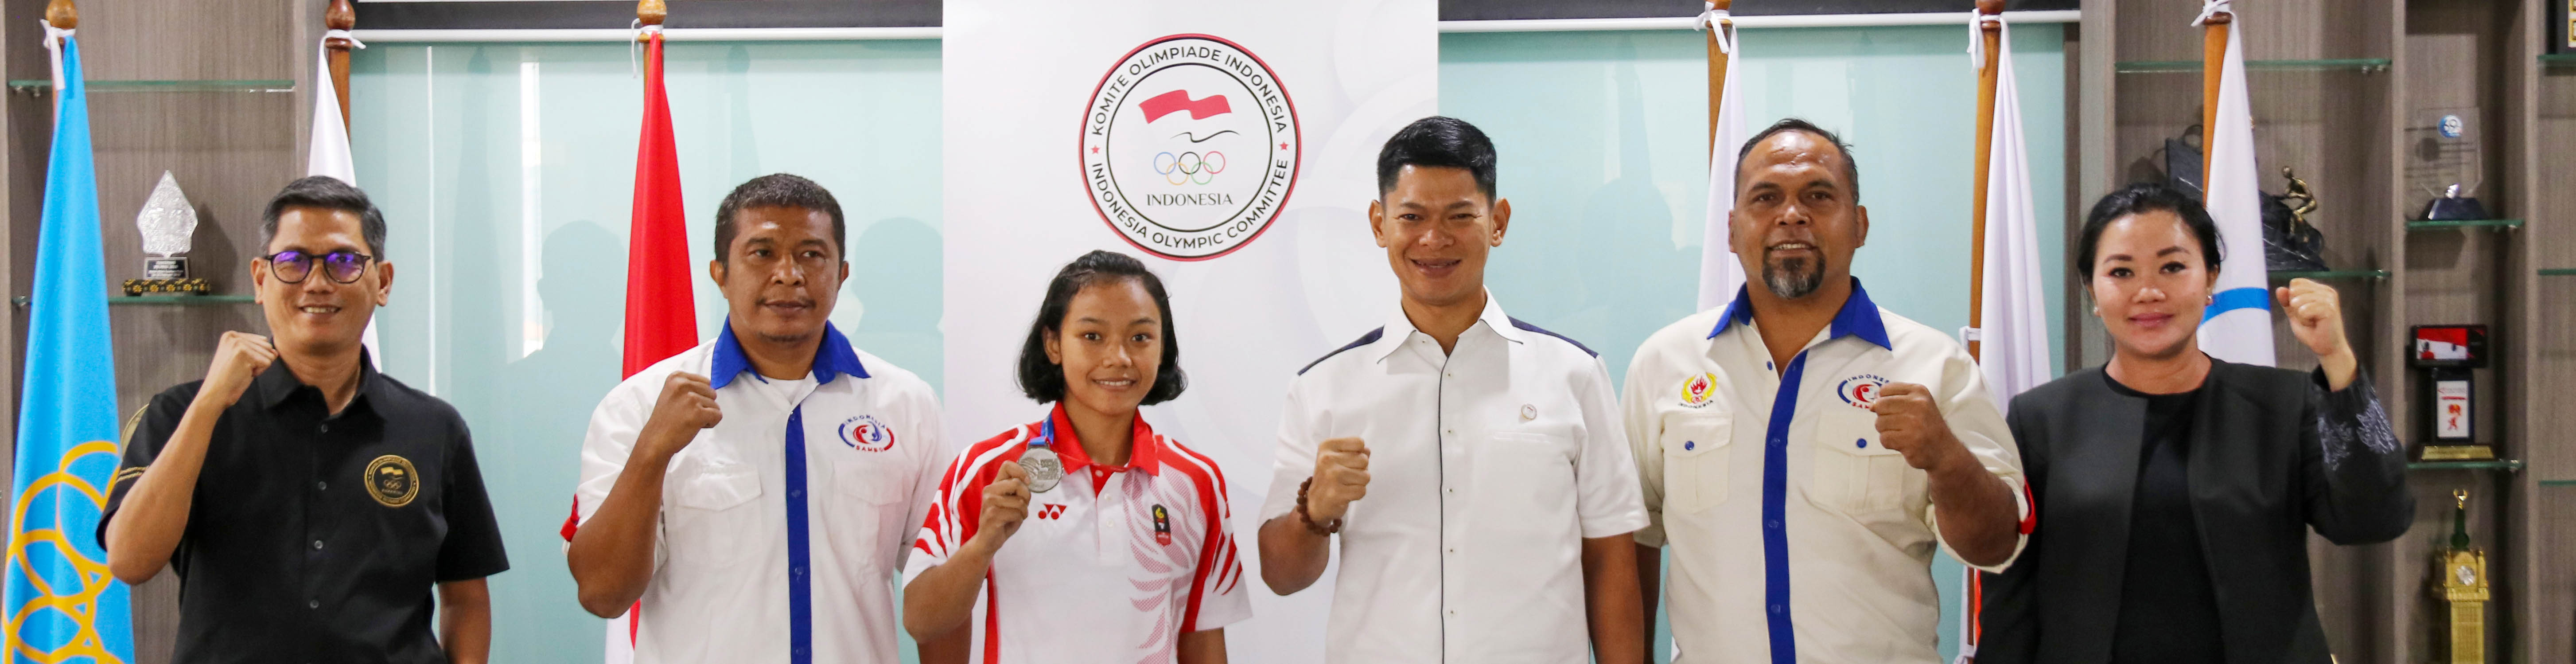 Indonesia Olympic Commitee - NOC President Meets World Junior Sambo Silver Medalist